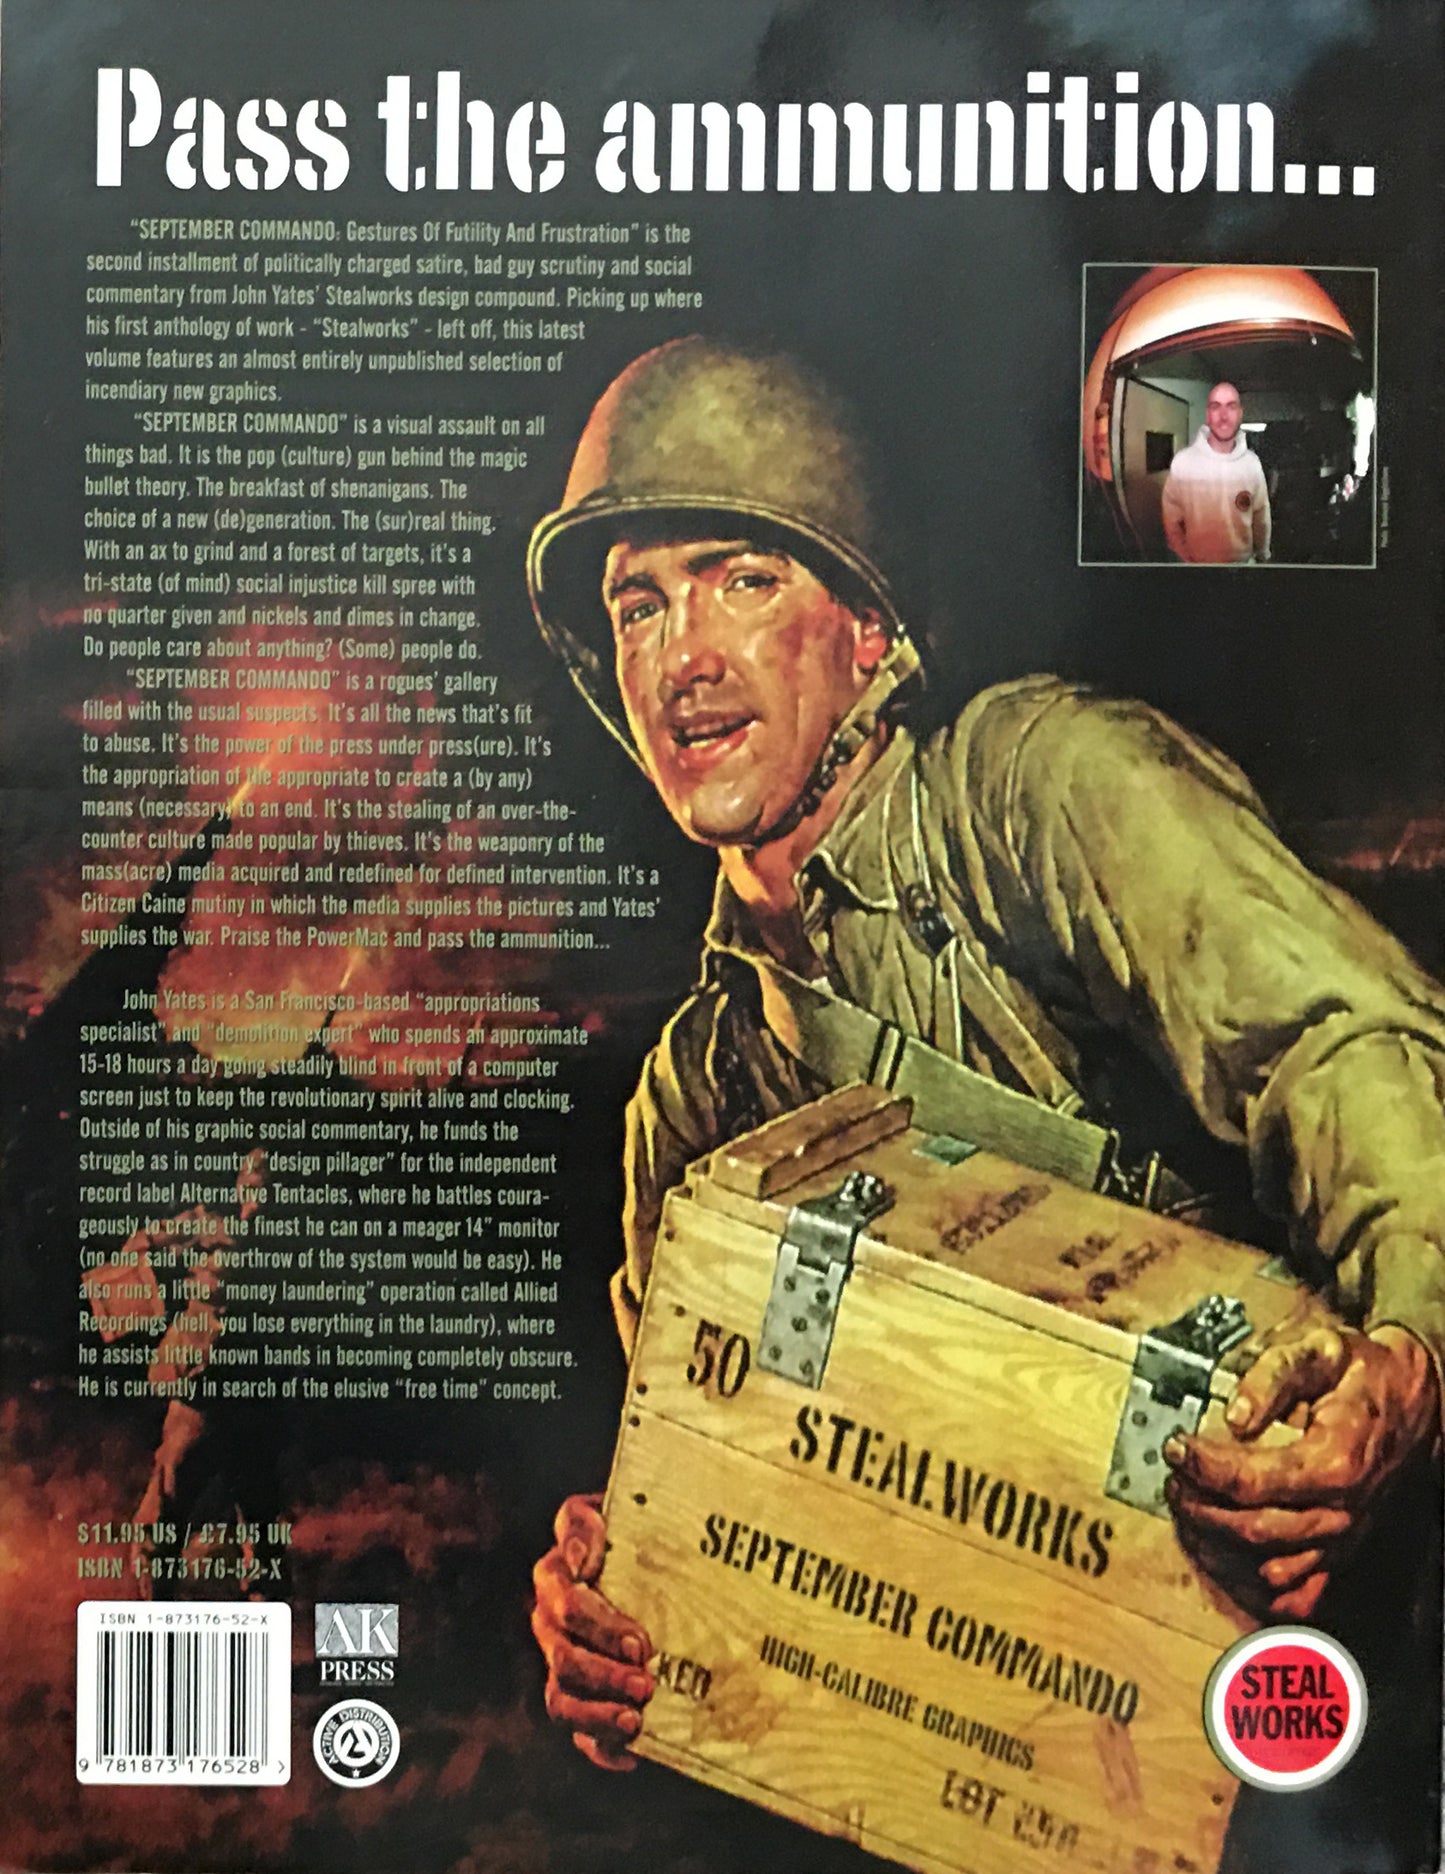 Stealworks "September Commando: Gestures of Futility and Frustration" Book